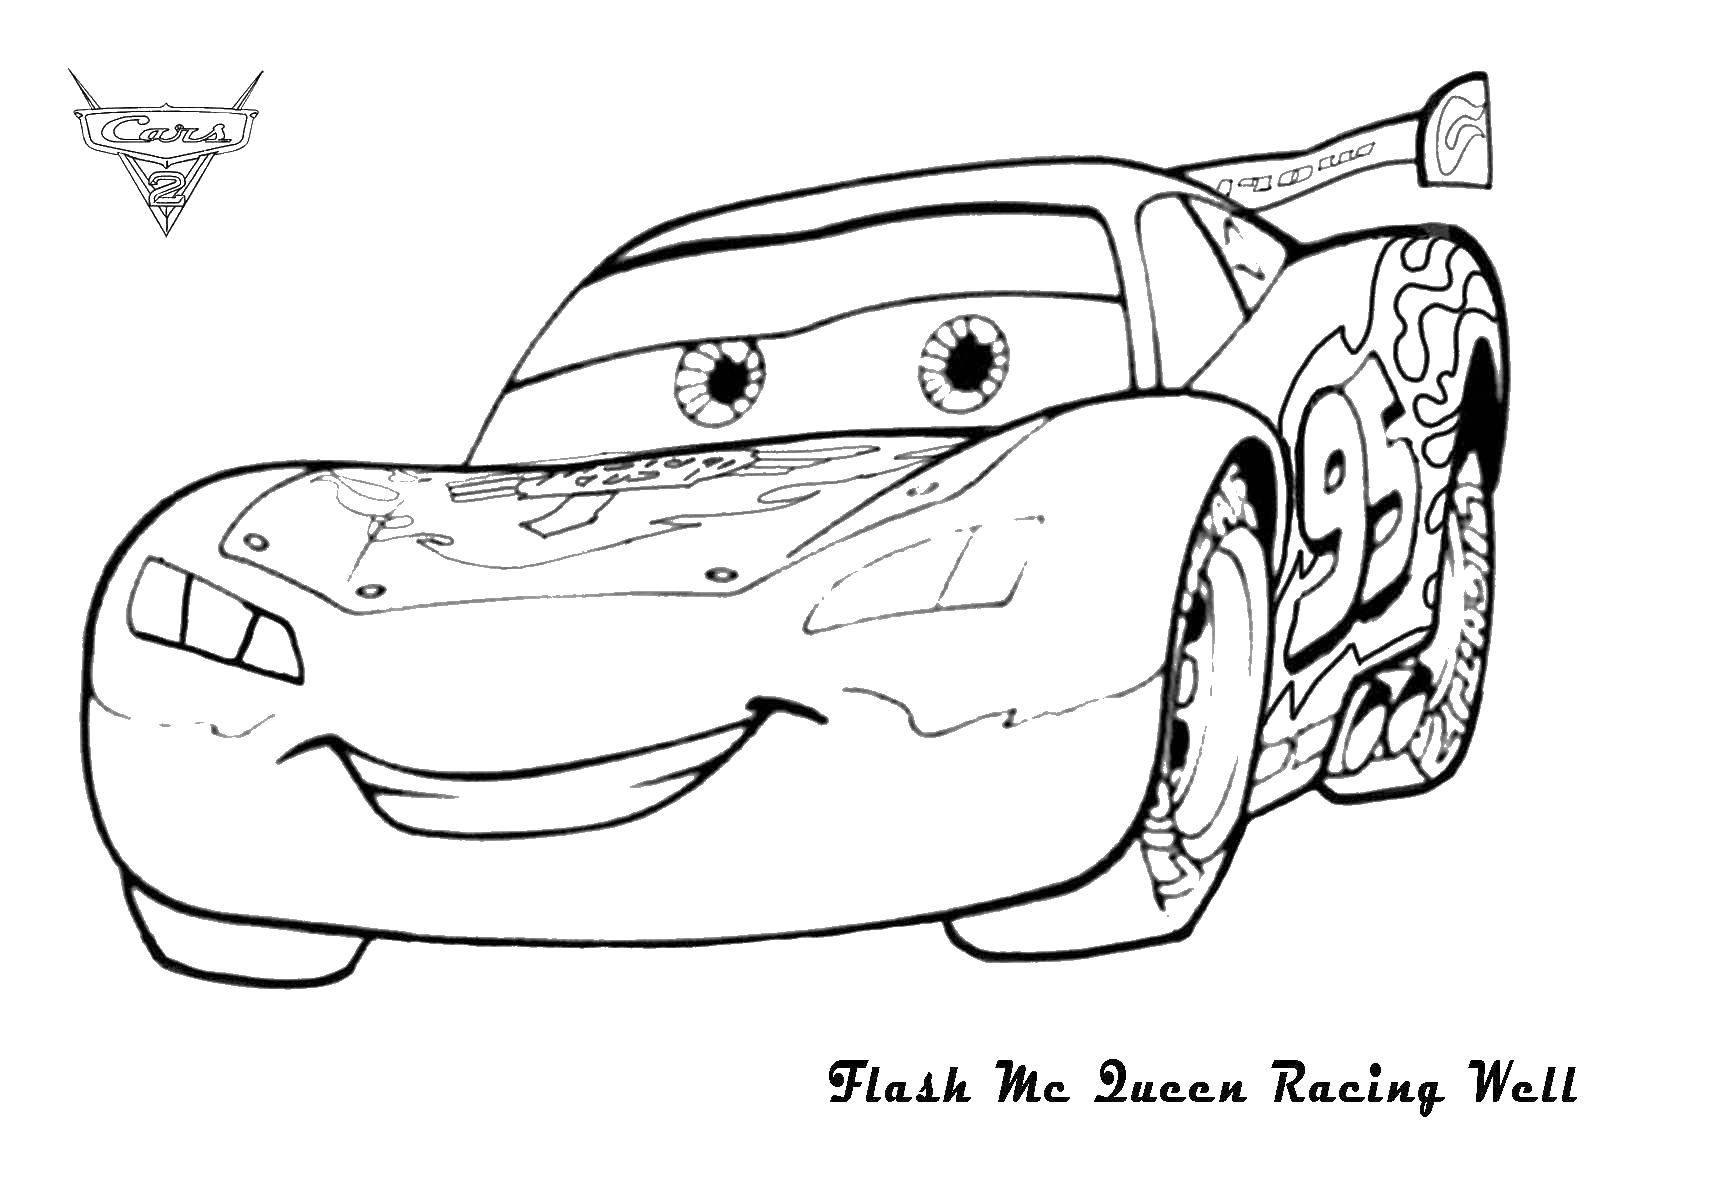 Coloring Cars. Category Machine . Tags:  cars, Cars, car, cartoons.